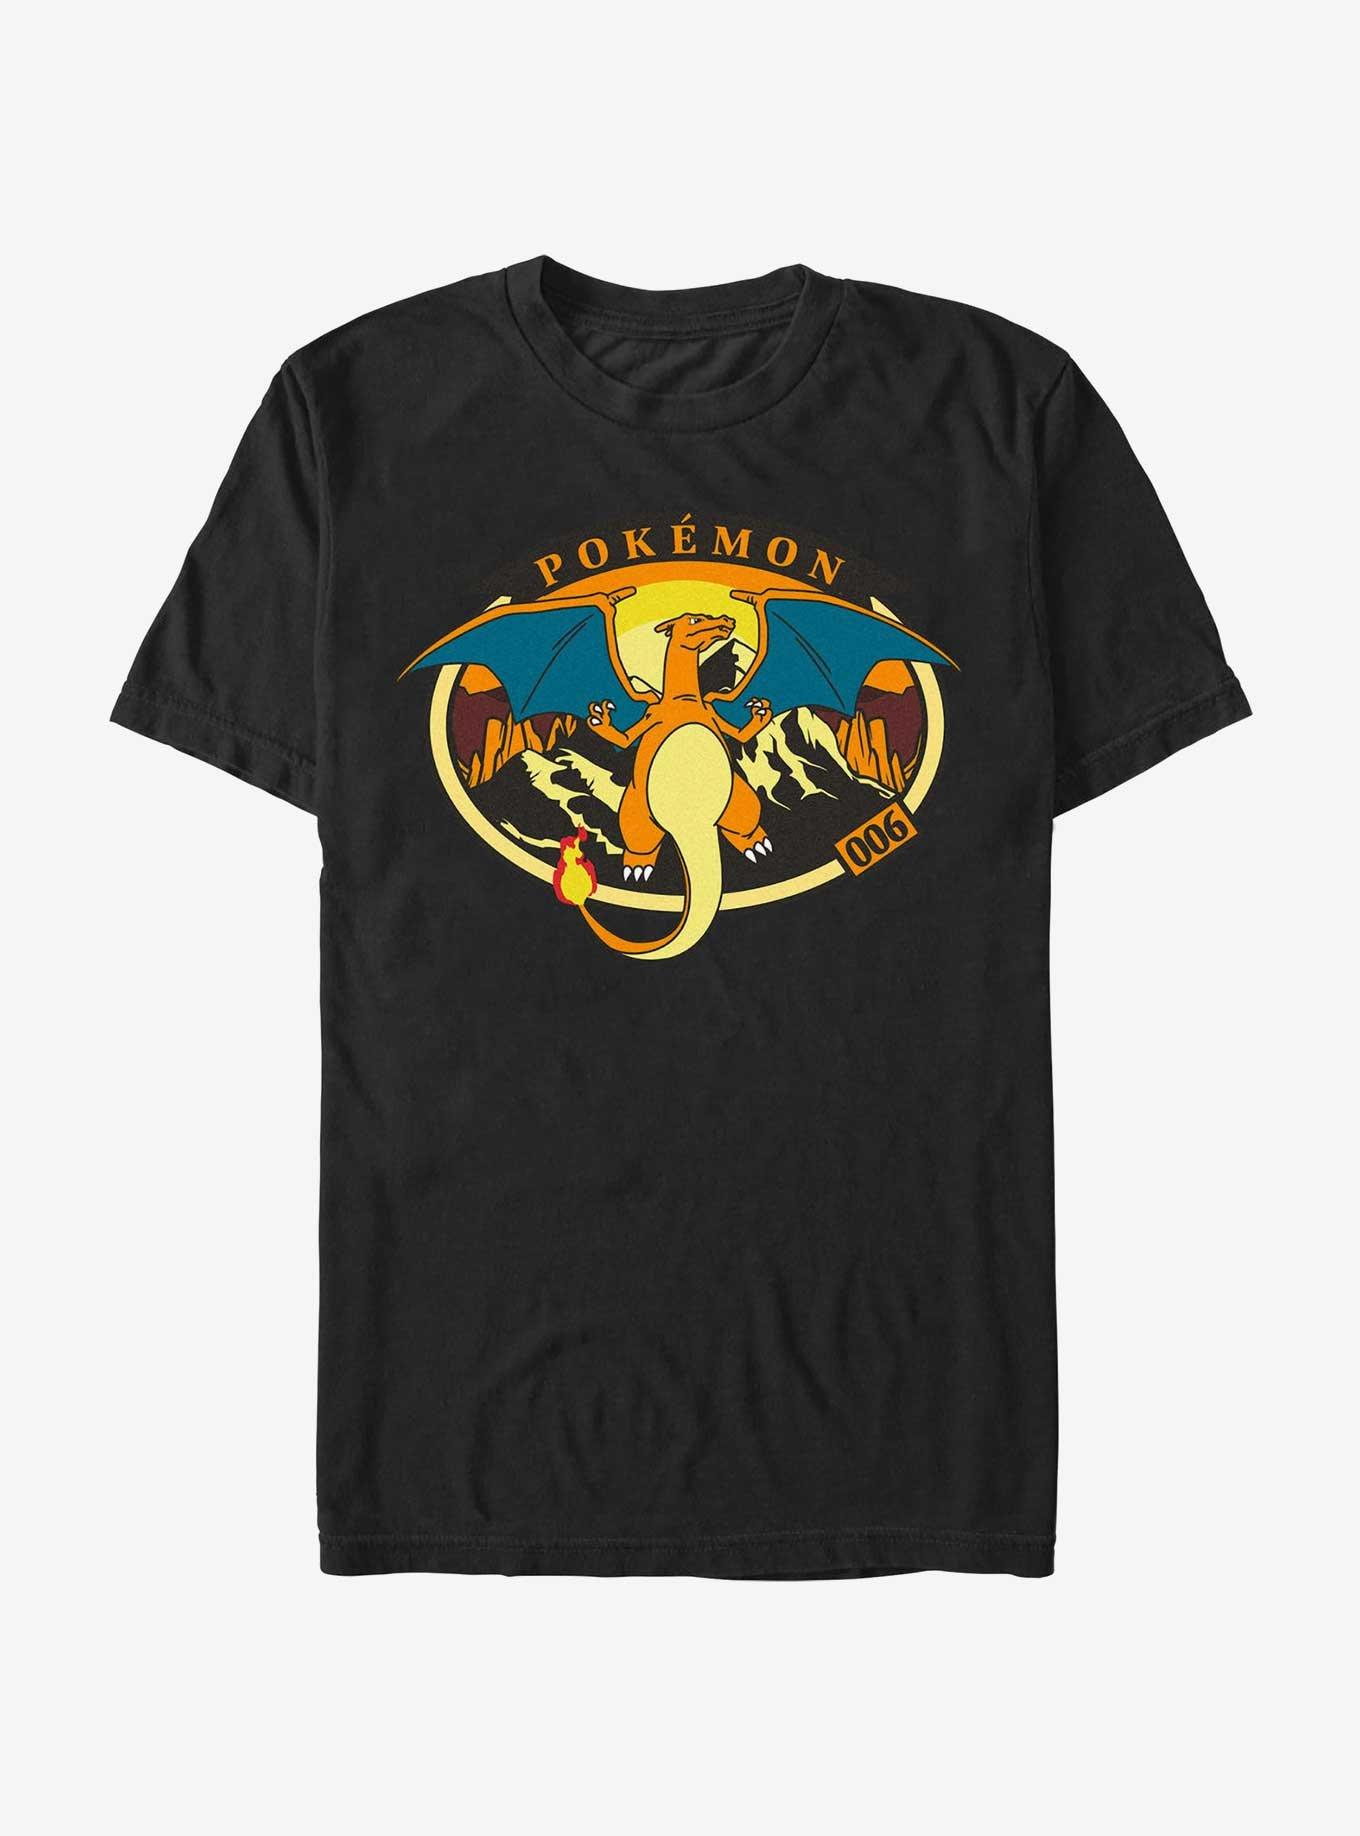 Pokemon Volcano Charizard T-Shirt, BLACK, hi-res